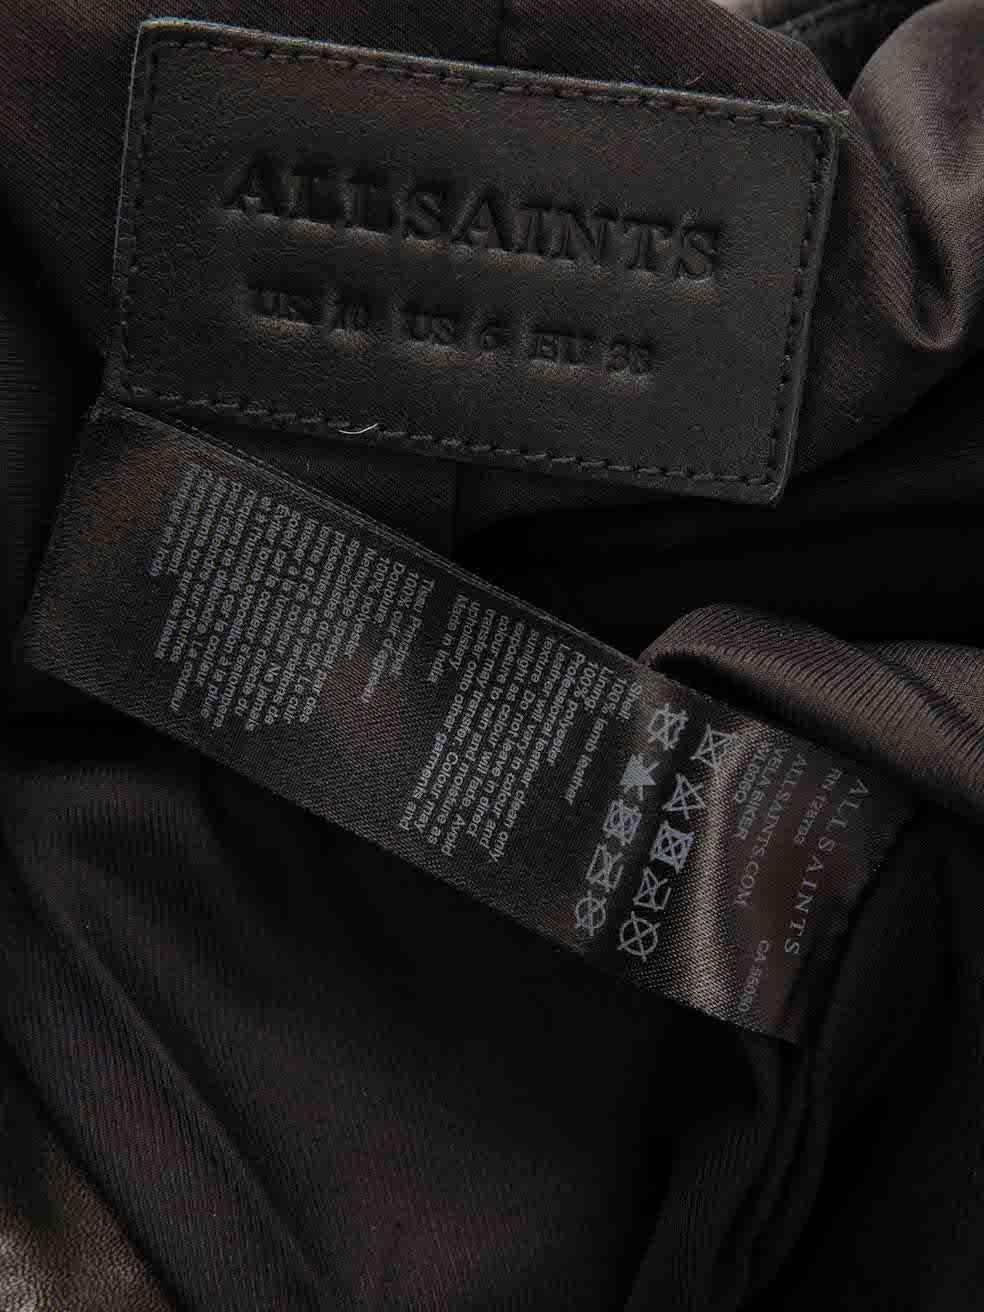 All Saints Black Leather Zipped Biker Jacket Size M For Sale 1